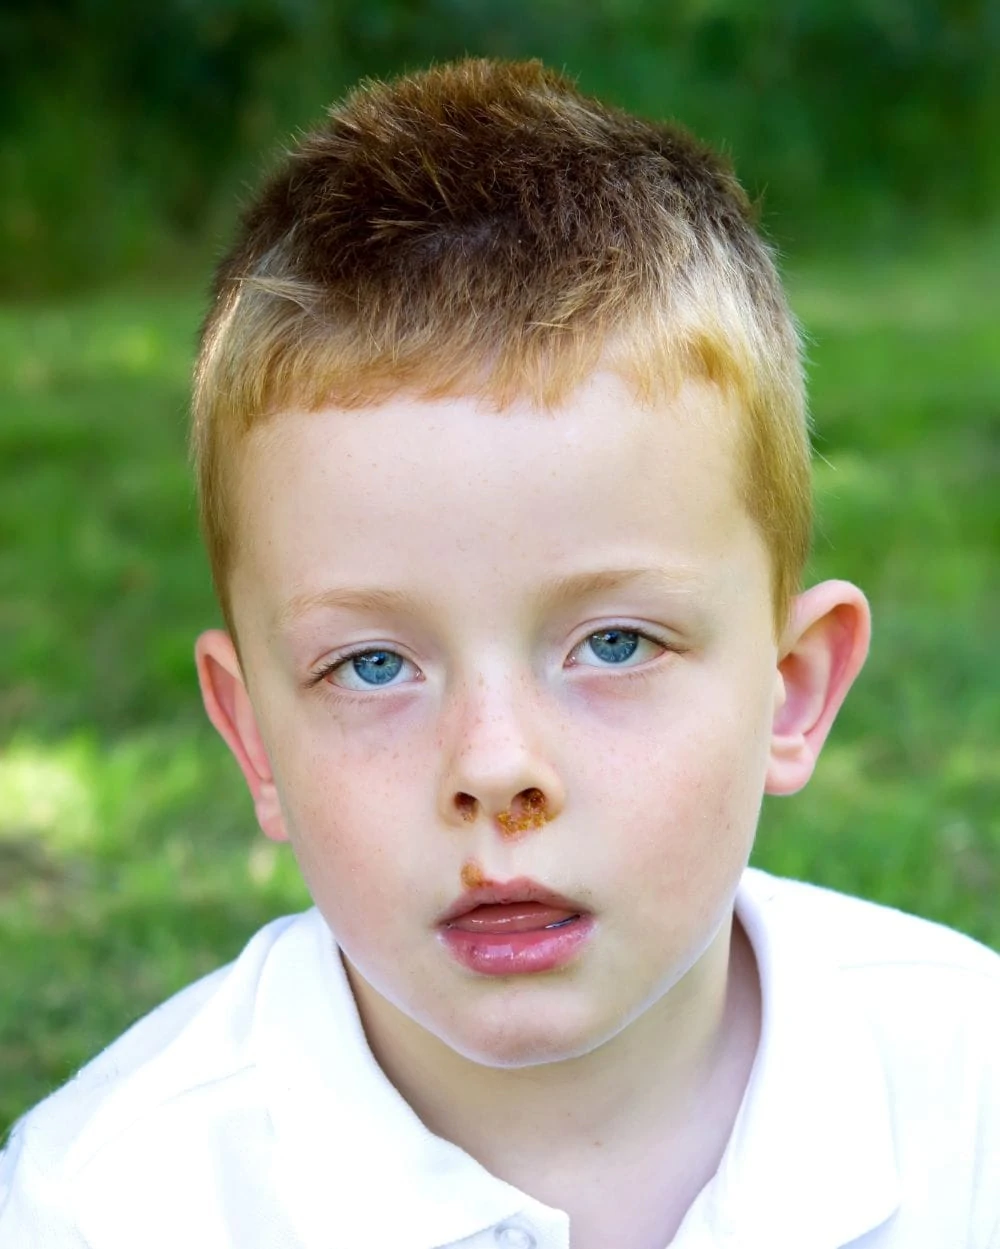 rash under a child's nose